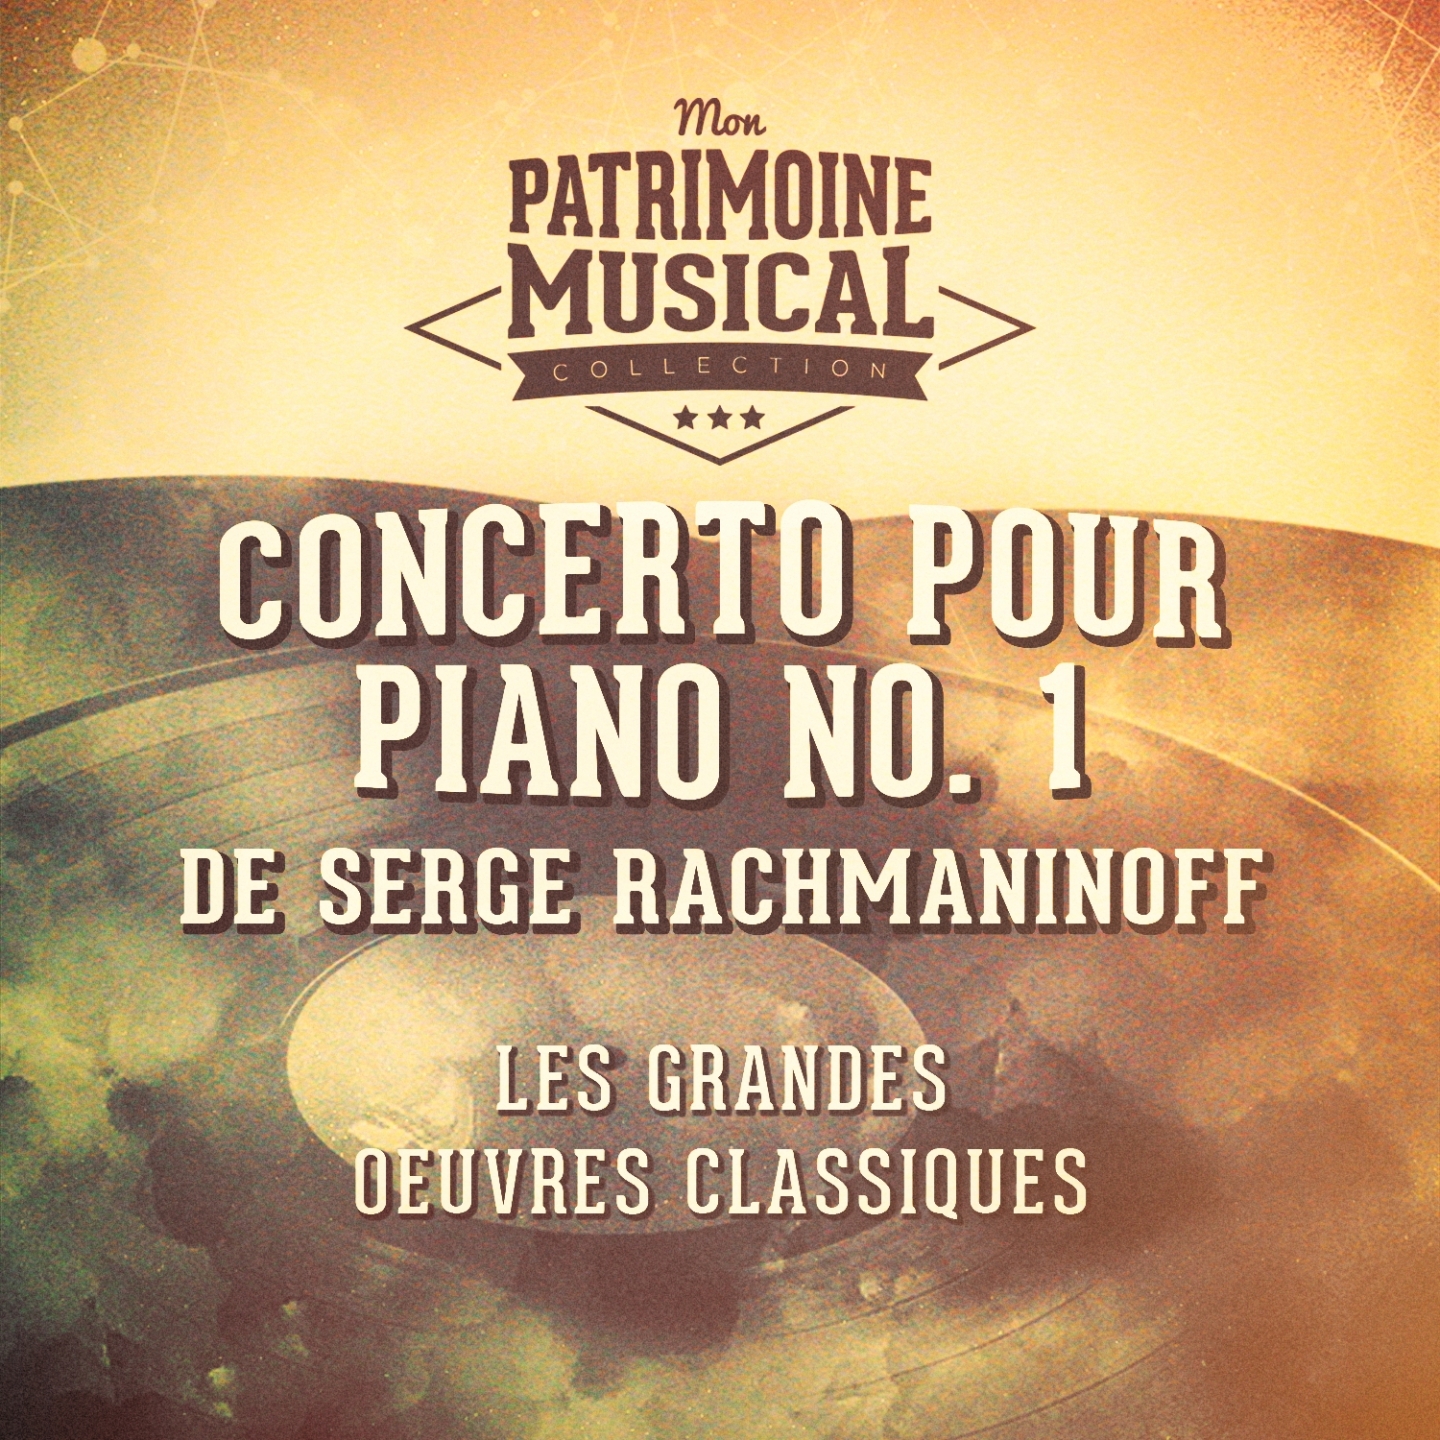 Les grandes oeuvres classiques :  Concerto pour piano No. 1  de Serge Rachmaninoff